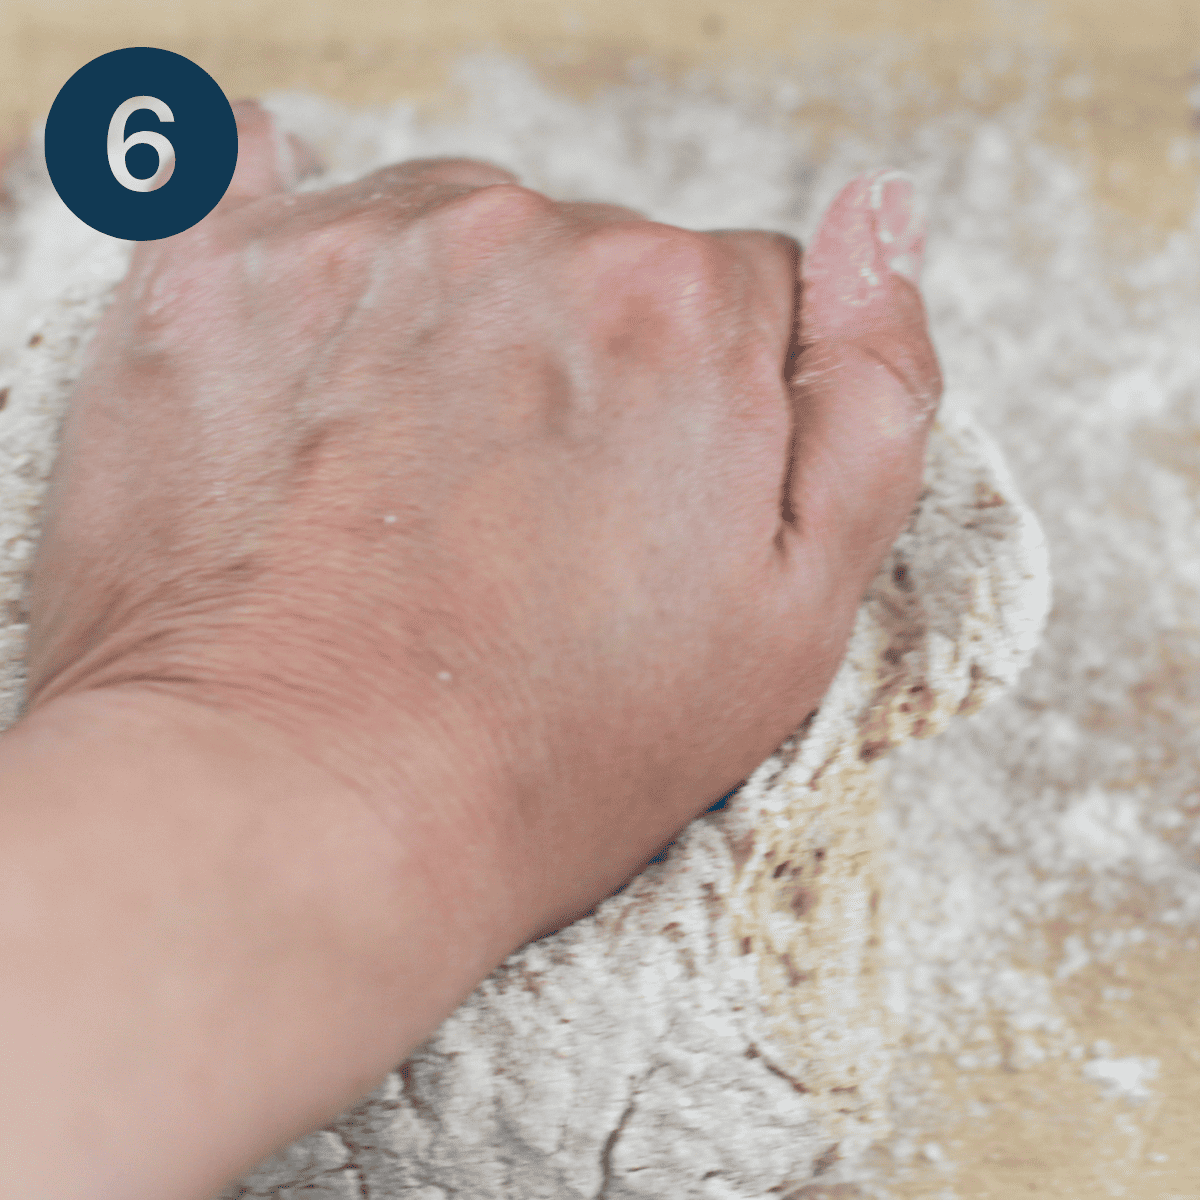 Kneading the oatmeal bread dough.